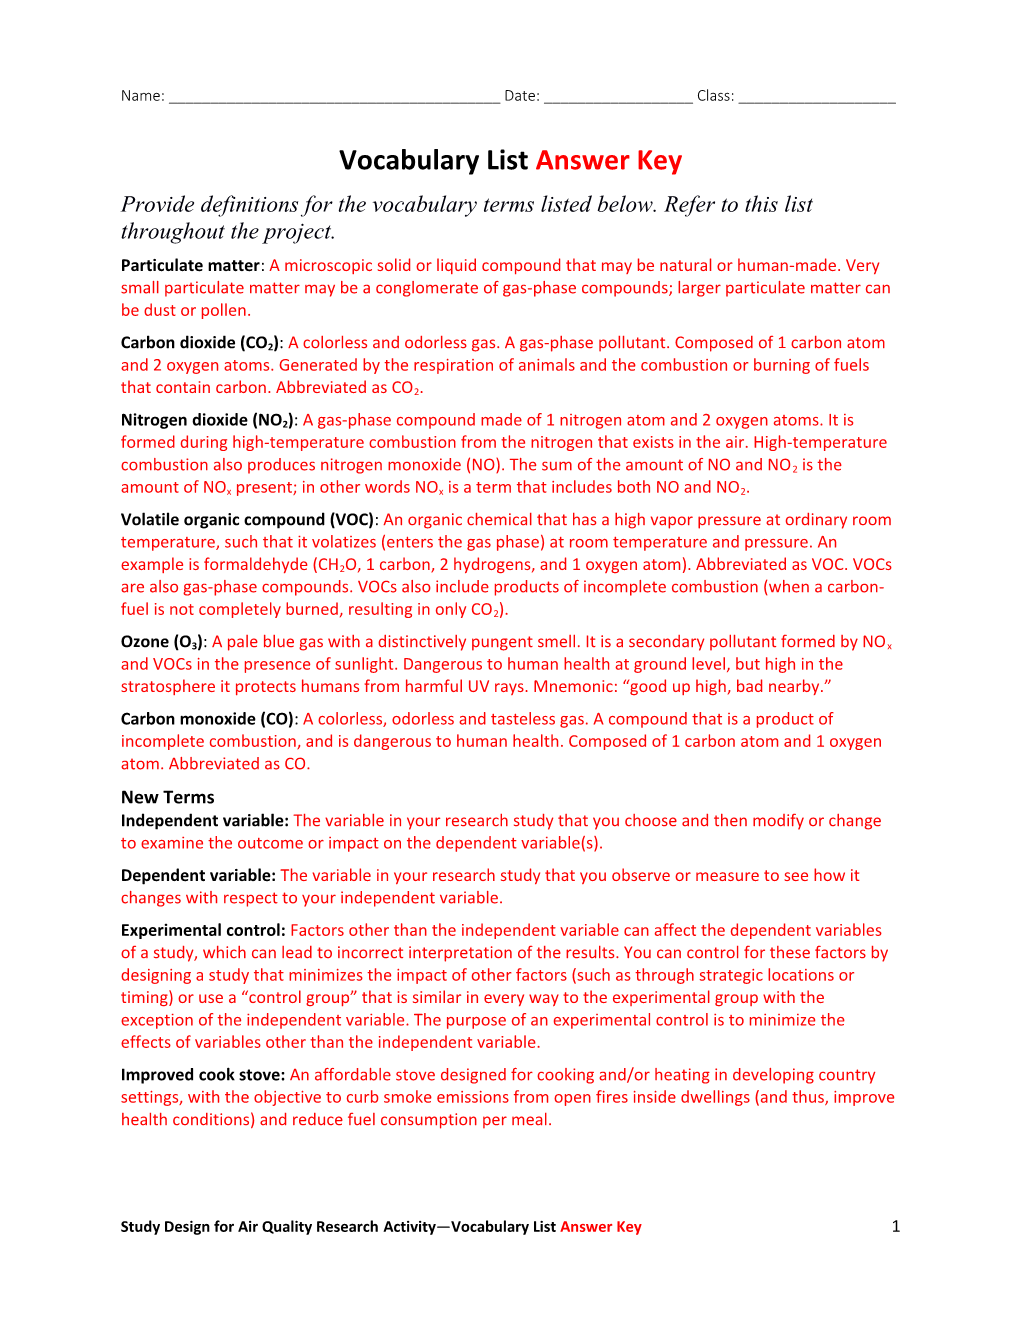 Vocabulary Listanswer Key